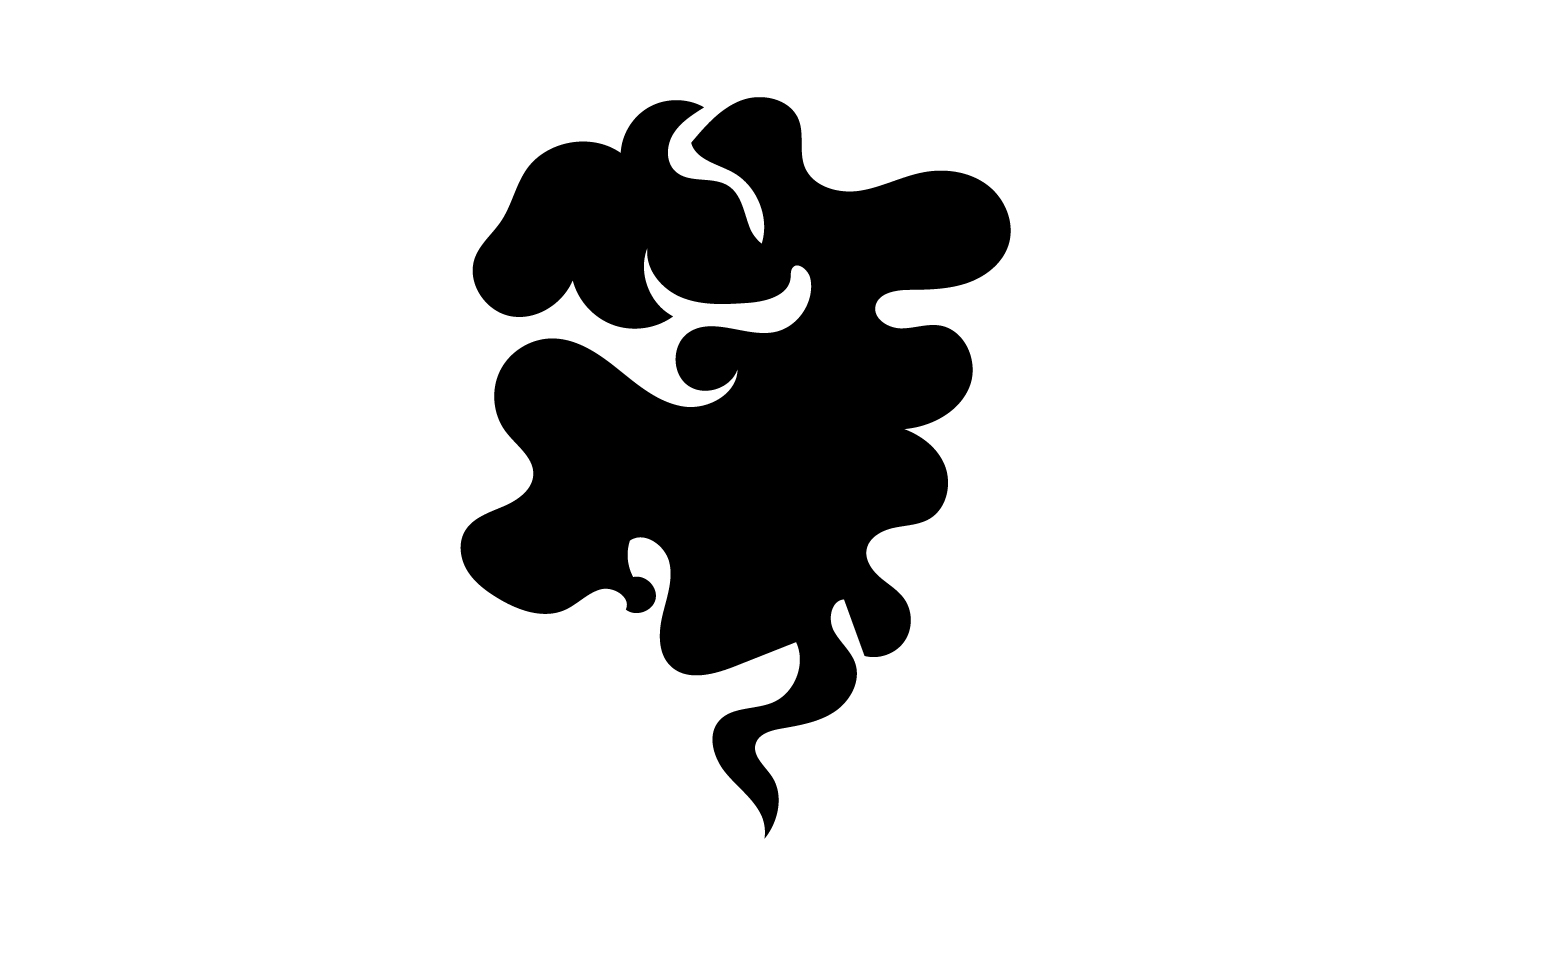 Smoke vape logo icon template design element v7